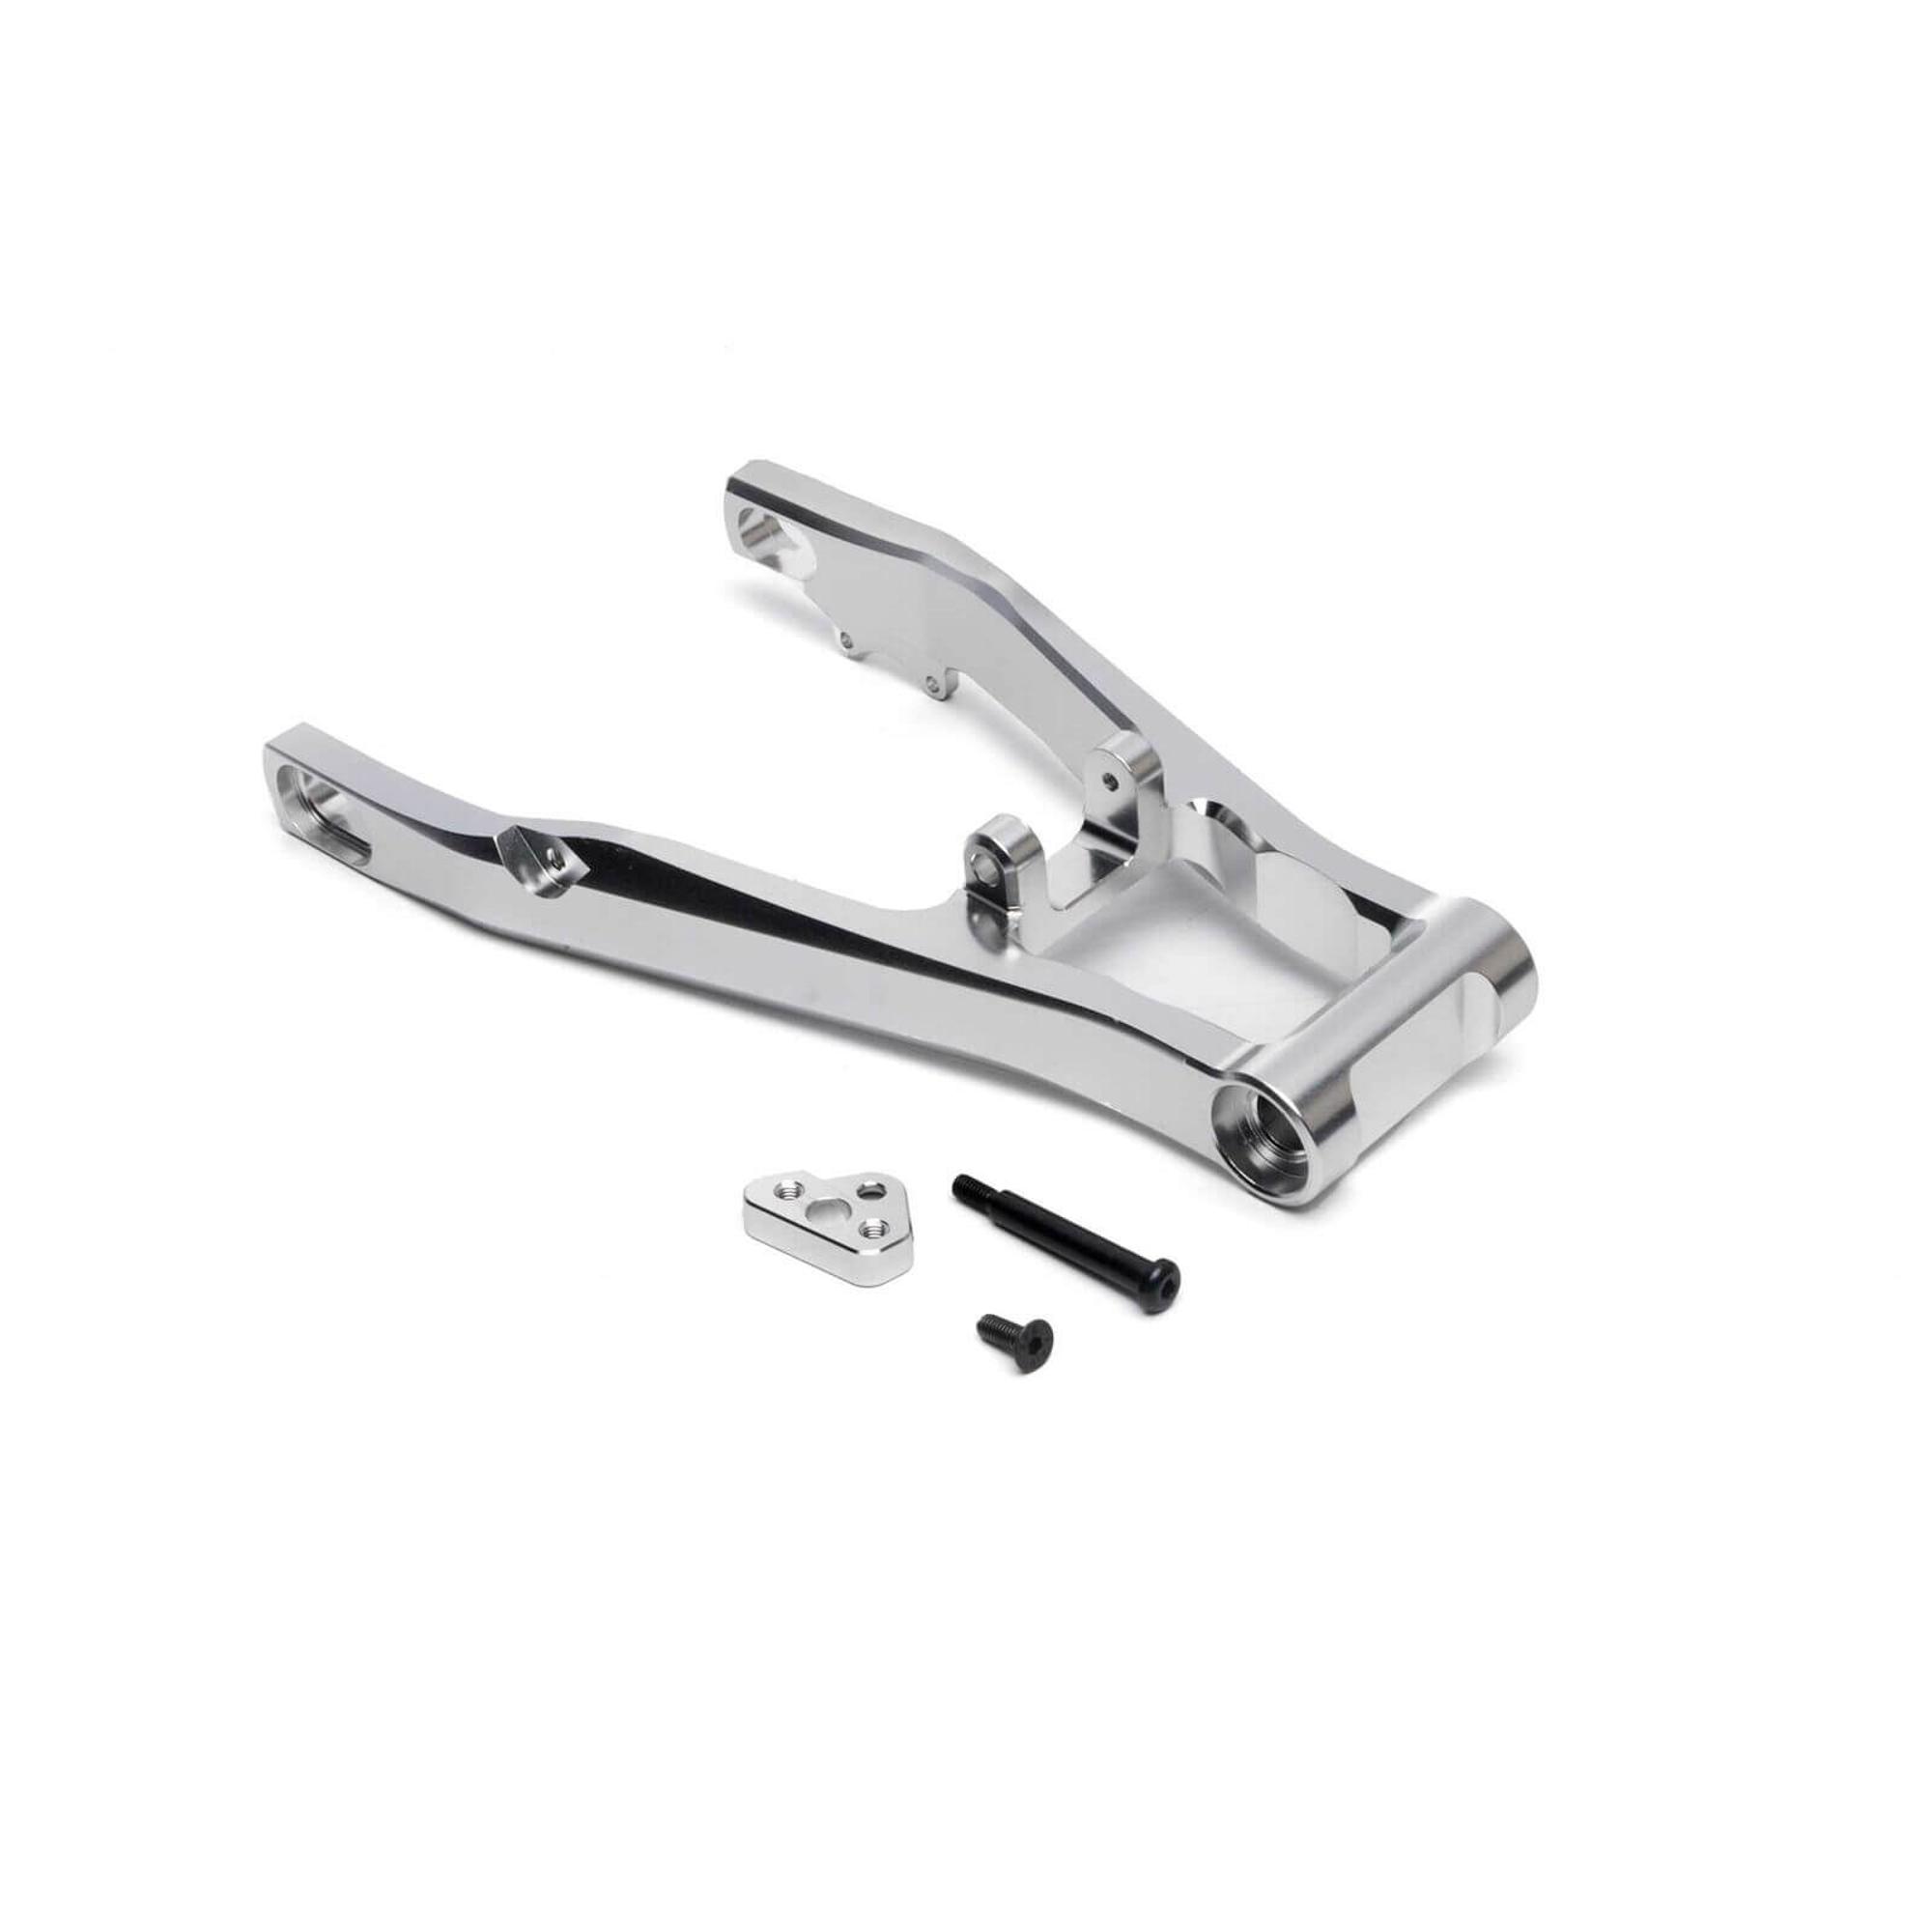 Aluminum Swing Arm for Promoto-MX (Silver)